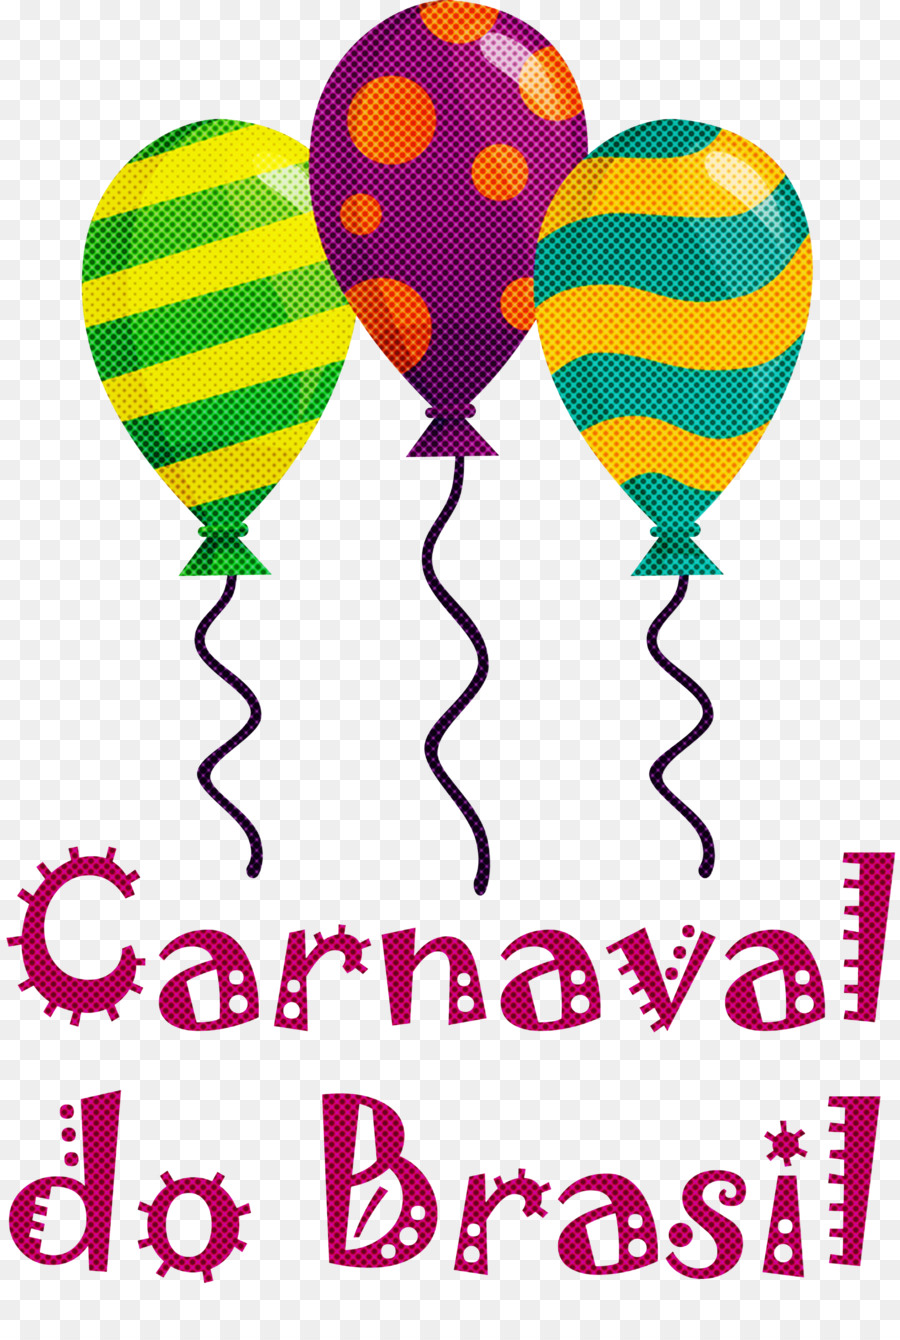 Carnaval do Brasil Brasilianischer Karneval - 